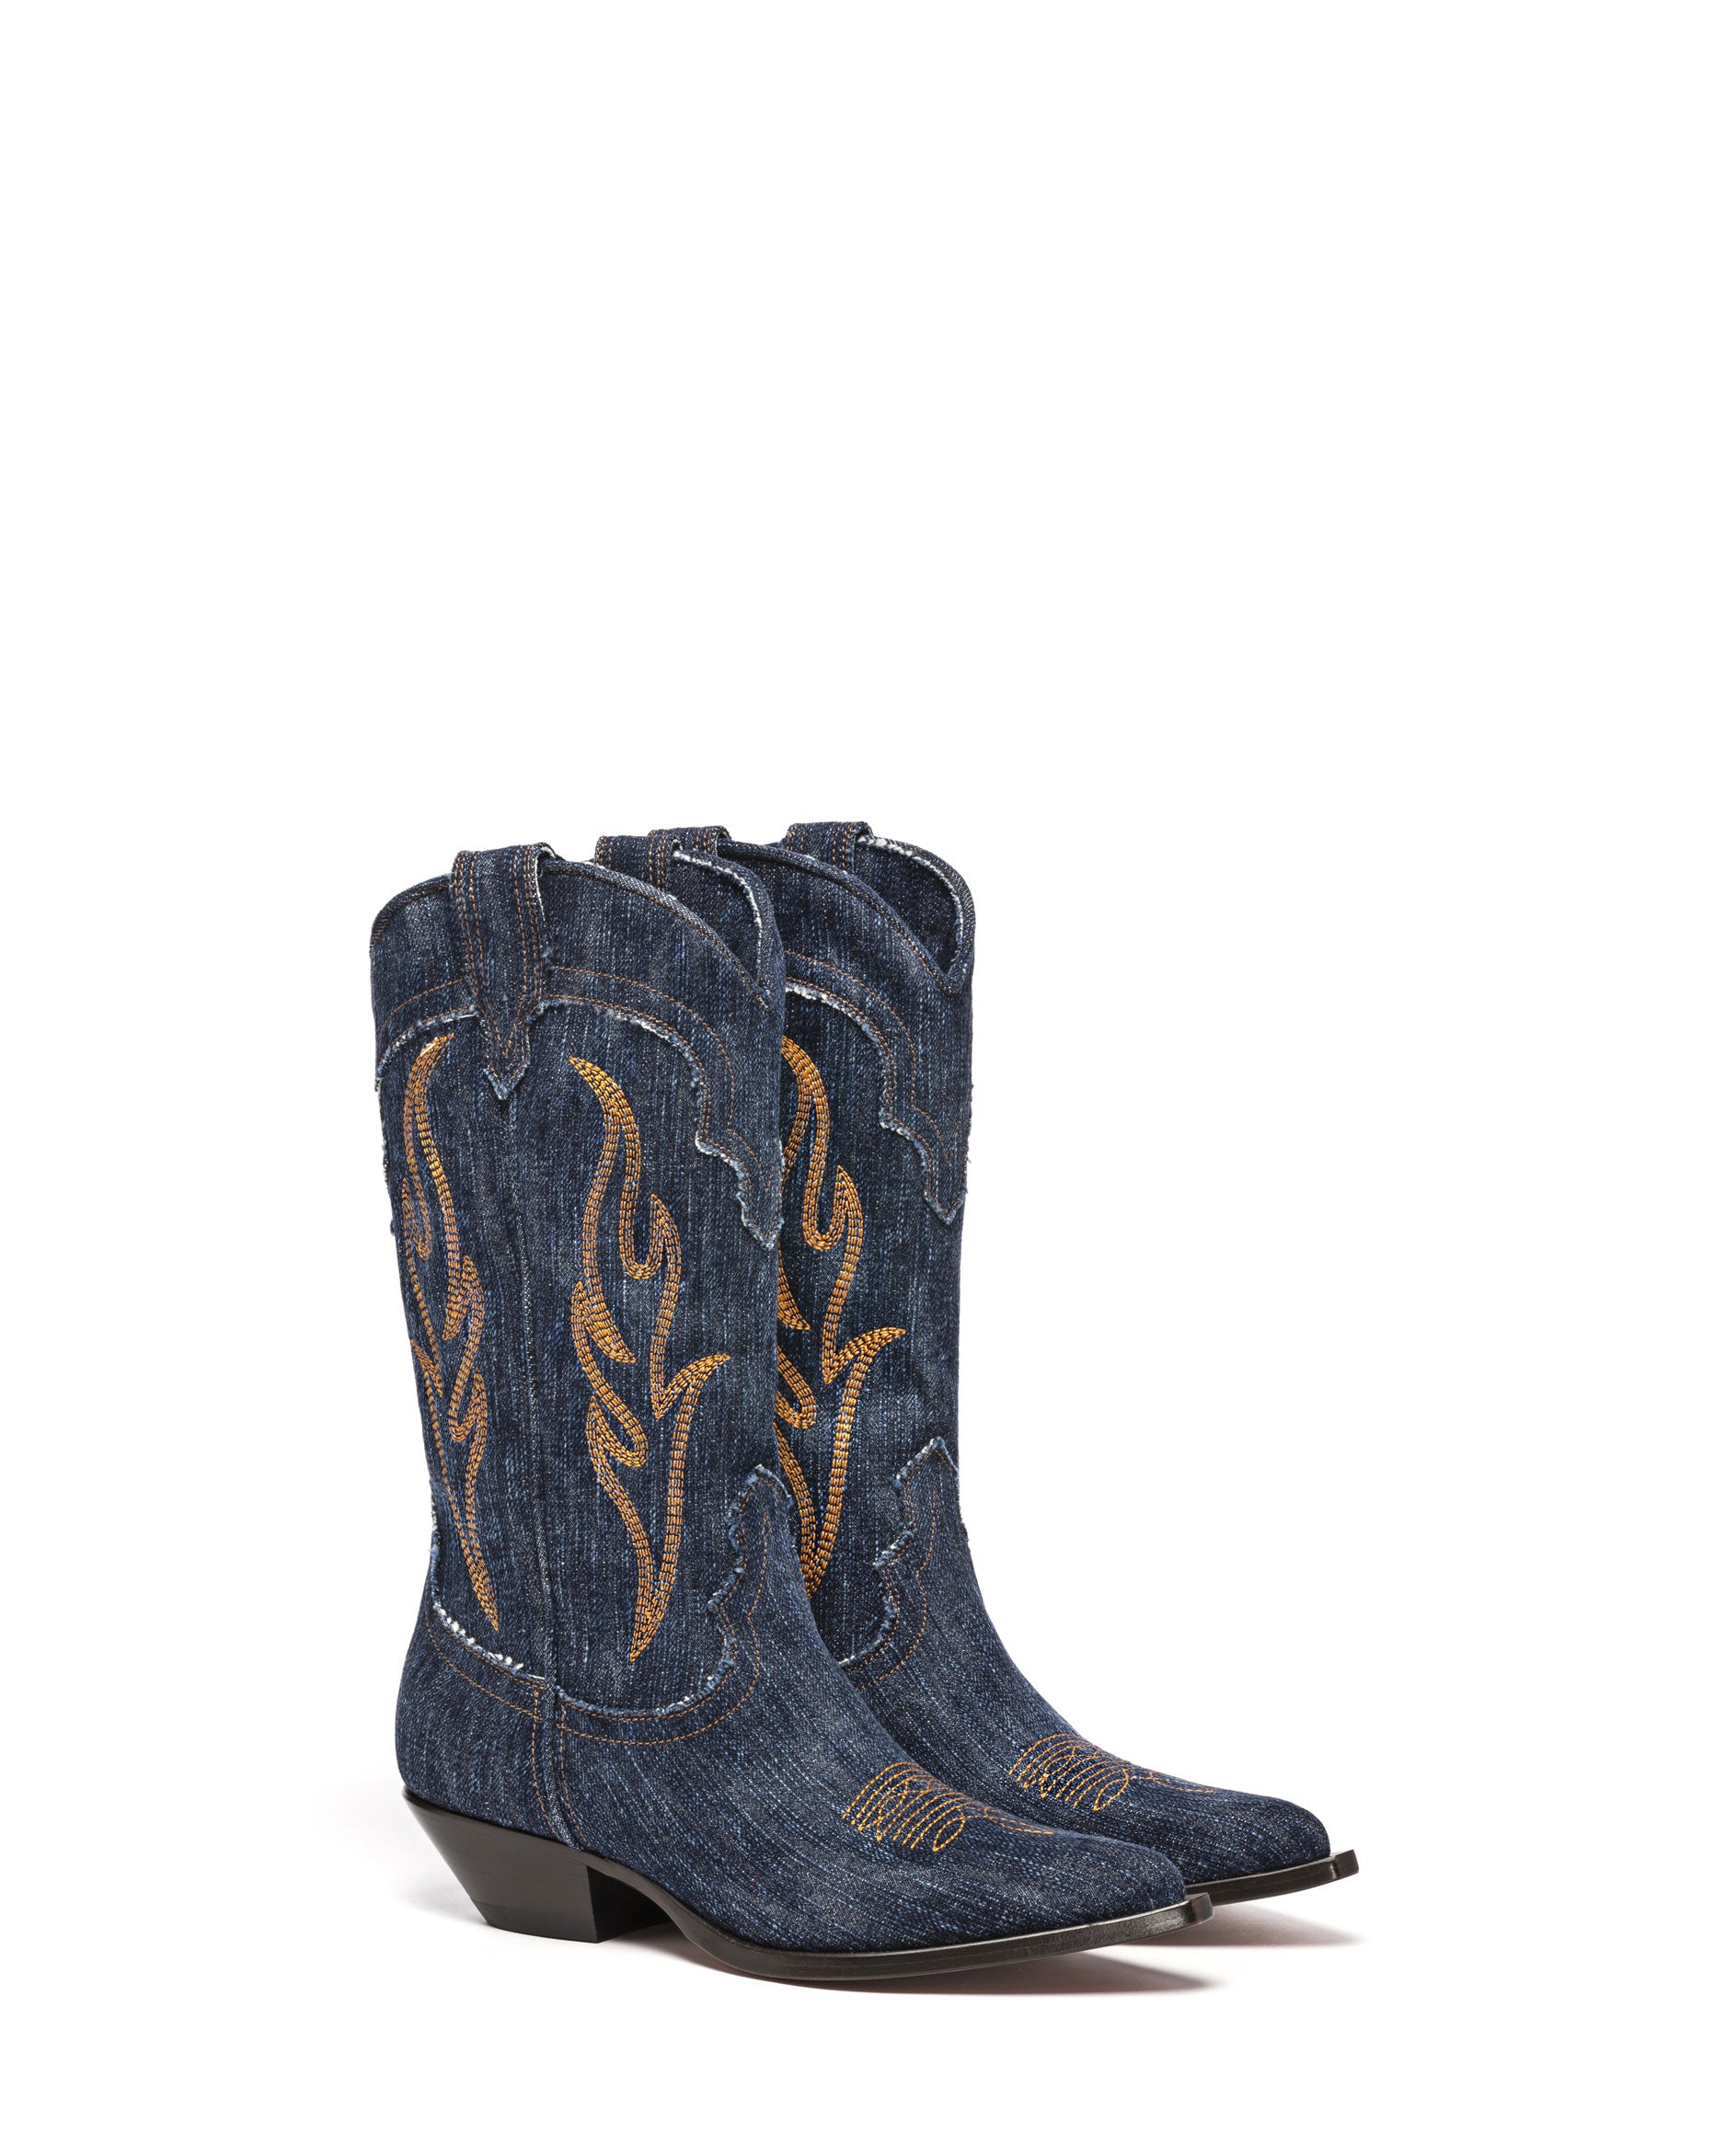 SANTA FE Women's Cowboy Boots in Blue Denim | Orange Embroidery 02